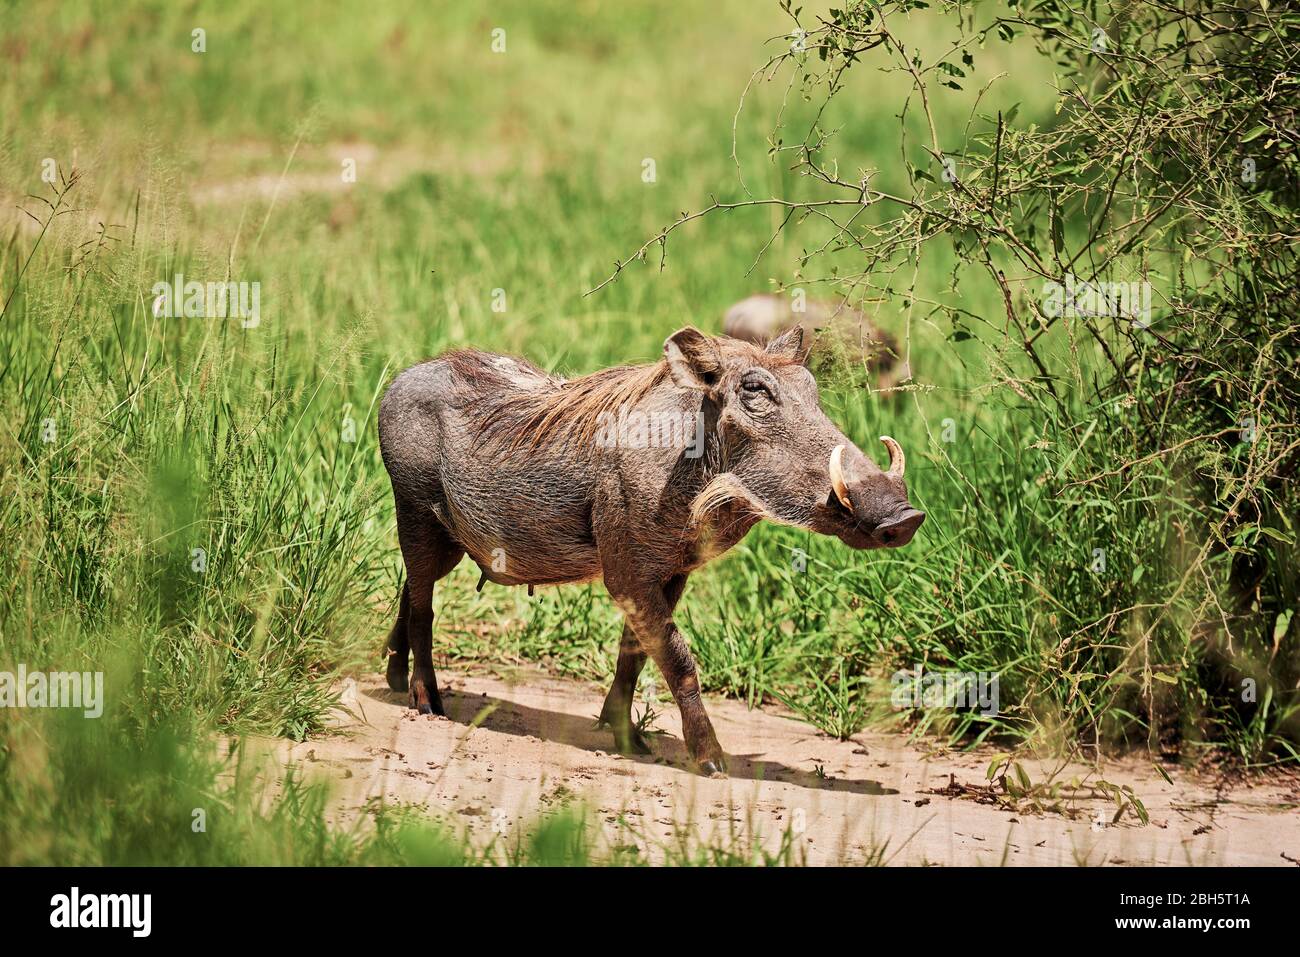 Shot of warthog in environment Stock Photo